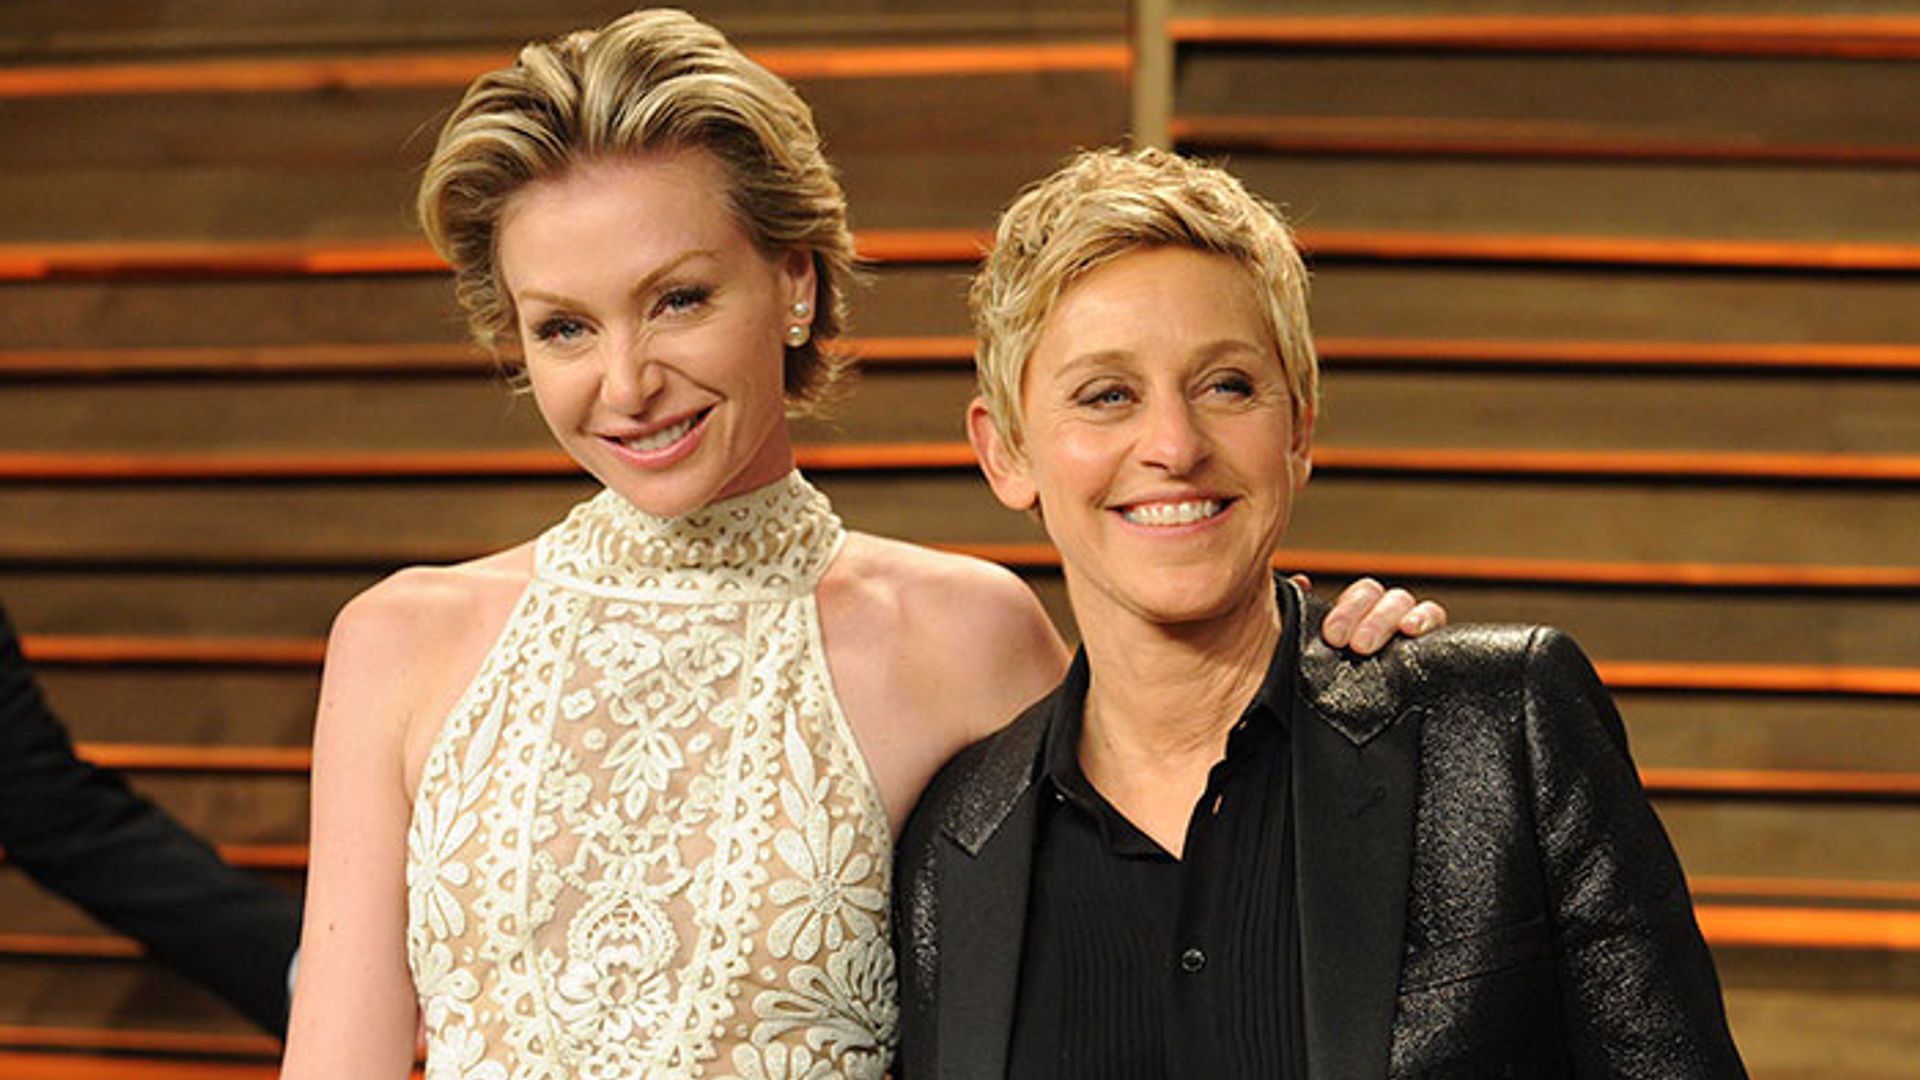 Ellen DeGeneres' living room where she married Portia could rival an Italian chateau